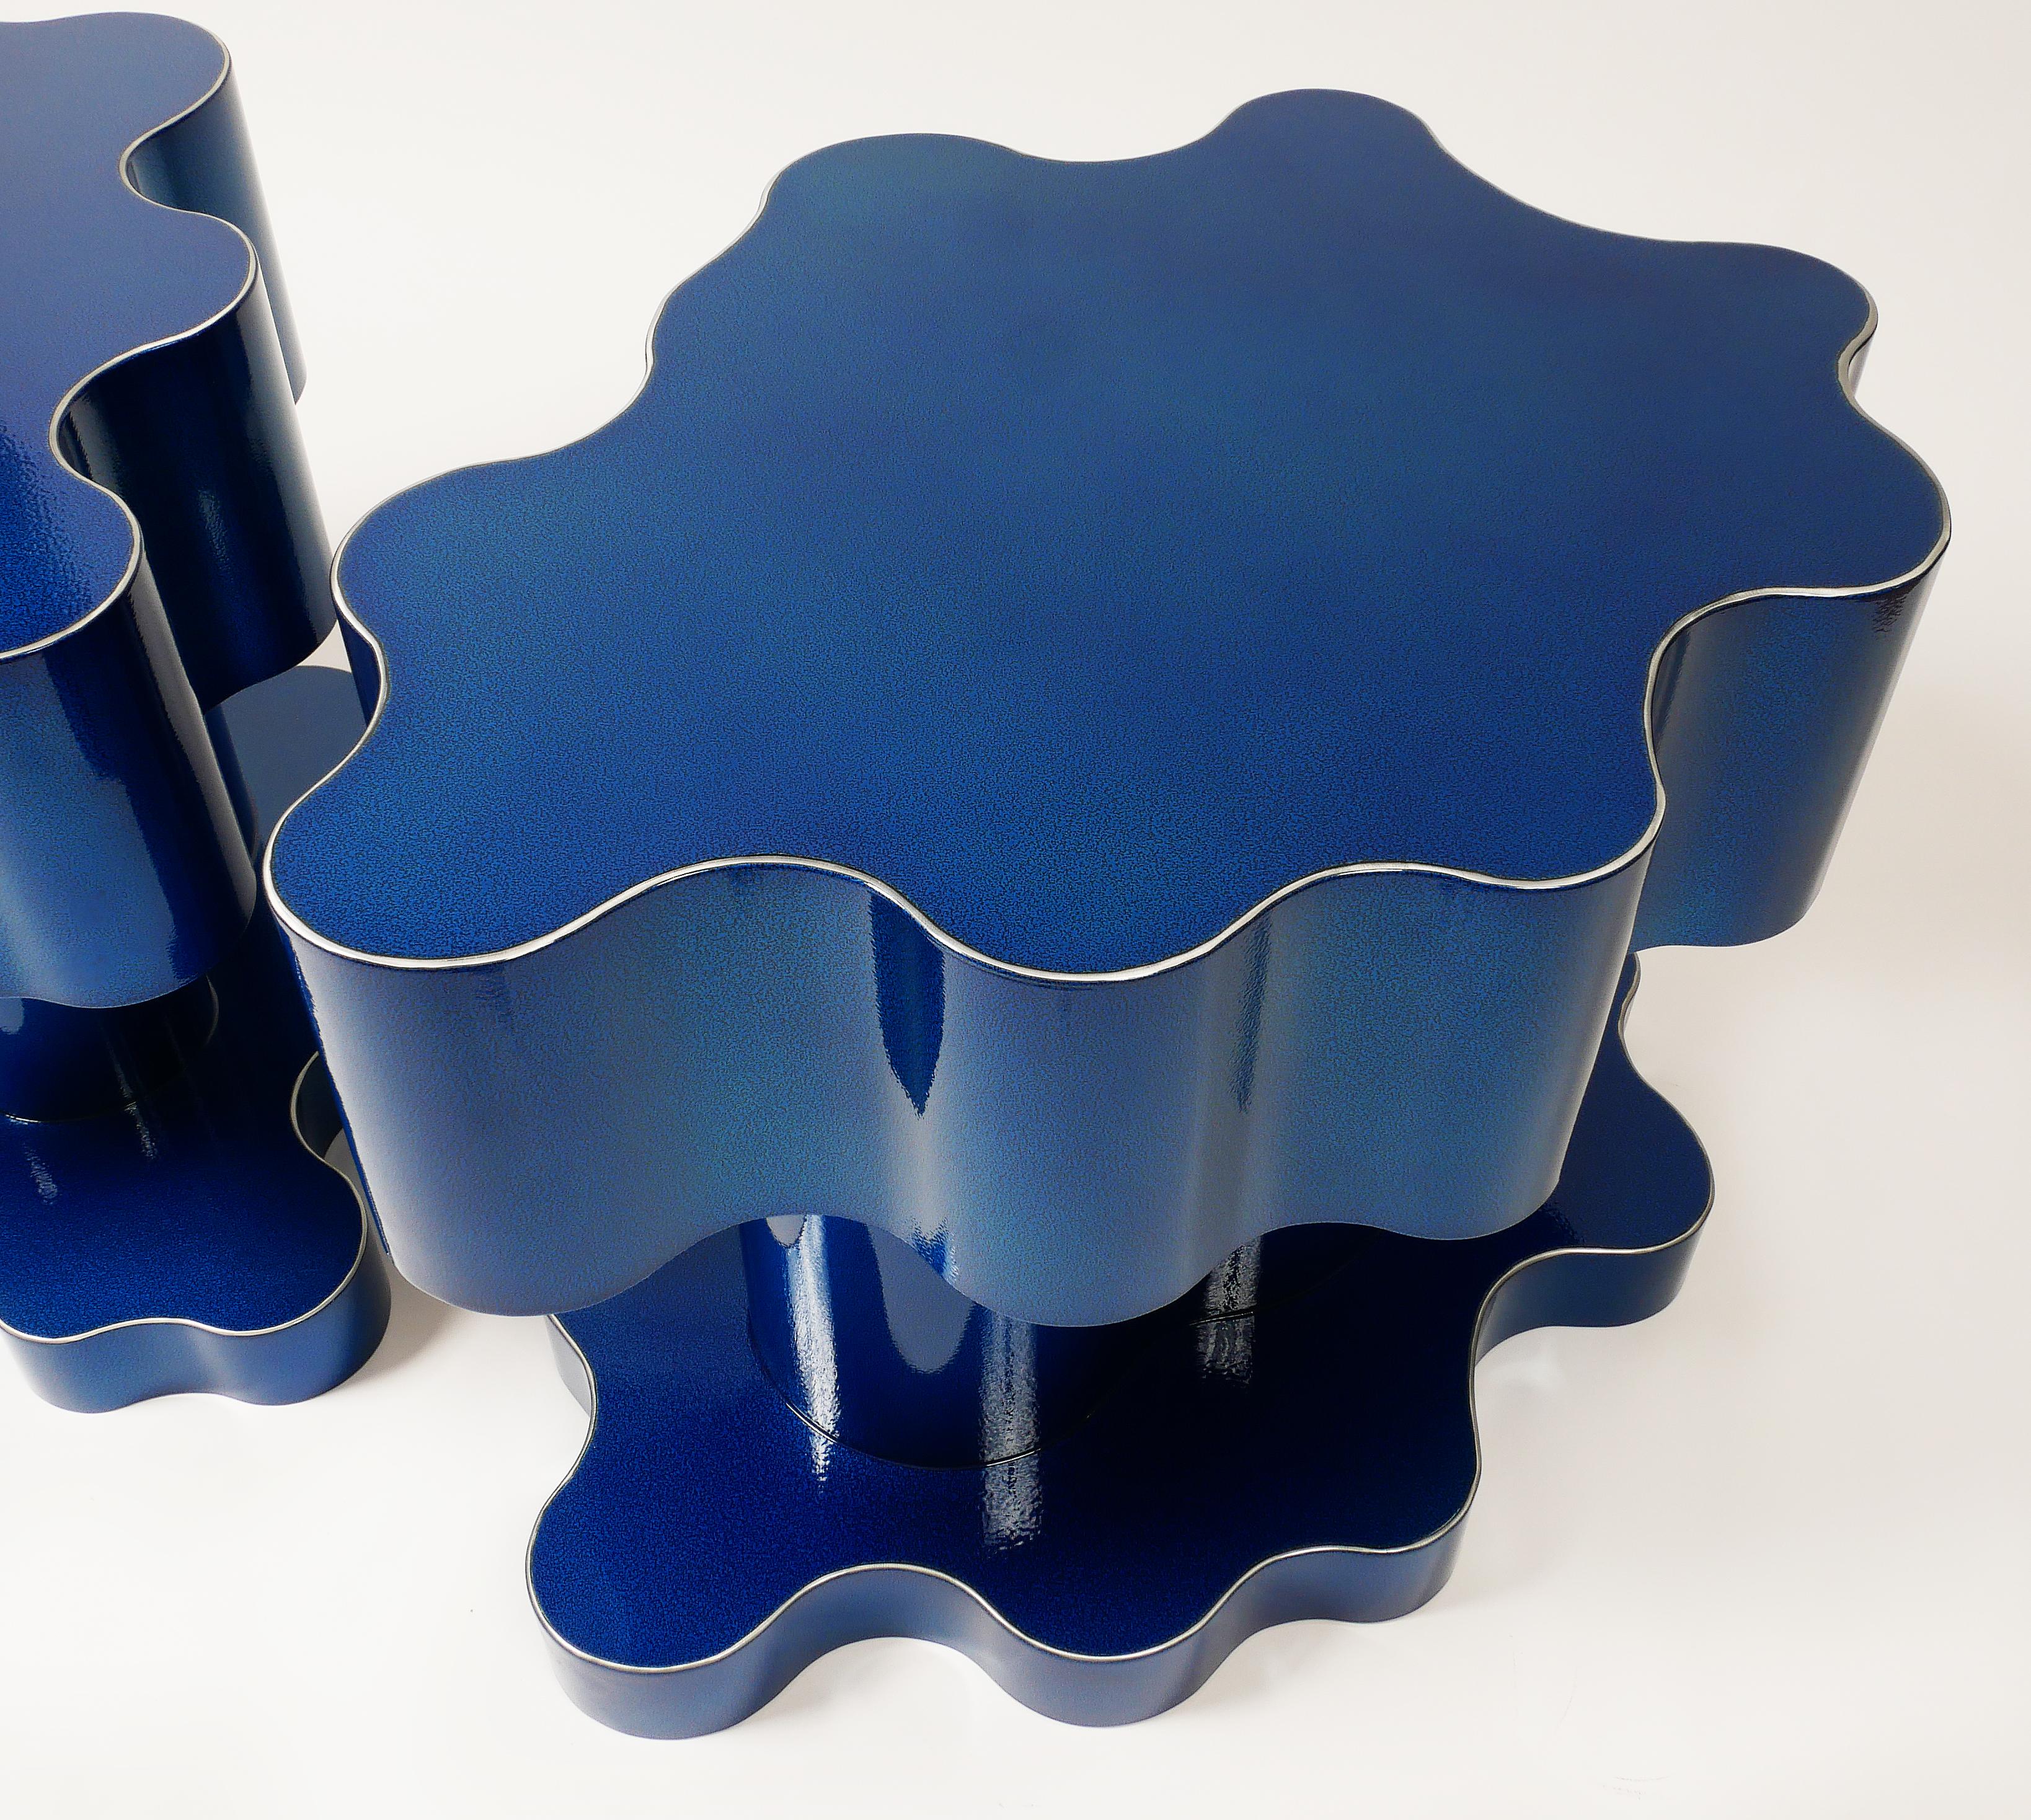 Powder-Coated Bert Furnari Studio Free-Form Abstract Side Tables, Pair